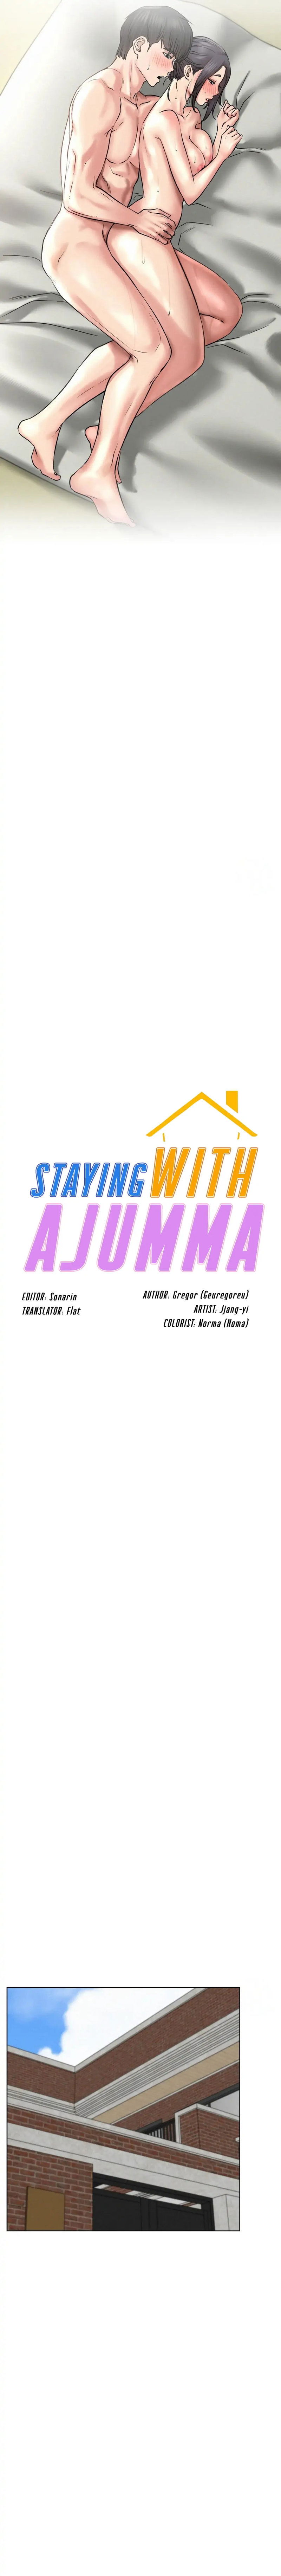 staying-with-ajumma-chap-43-2